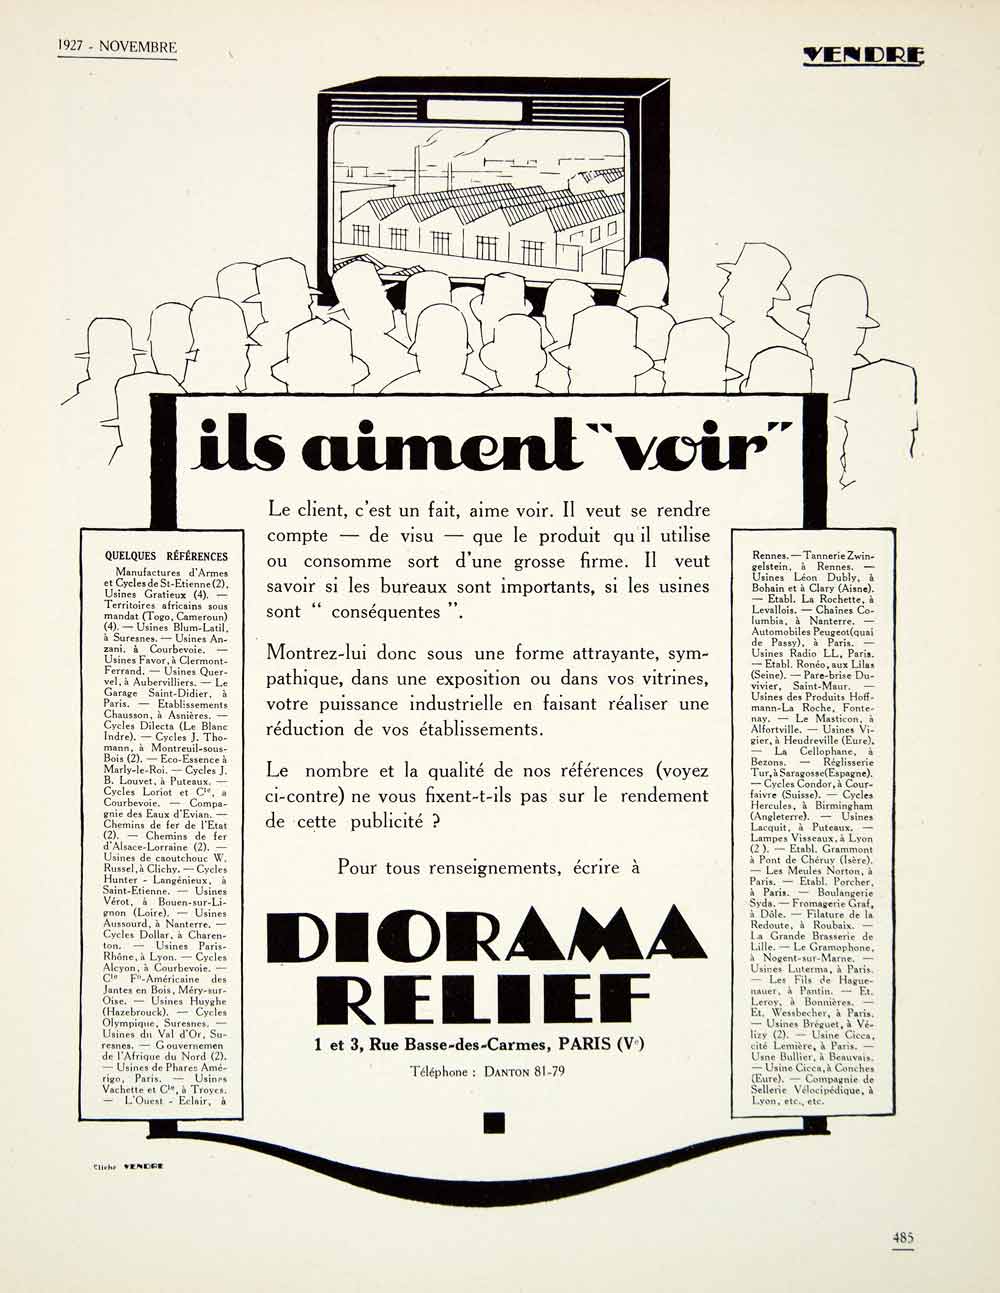 1927 Ad Diorama Relief 1 Rue Basse-des-Carmes Paris Advertising French VENA3